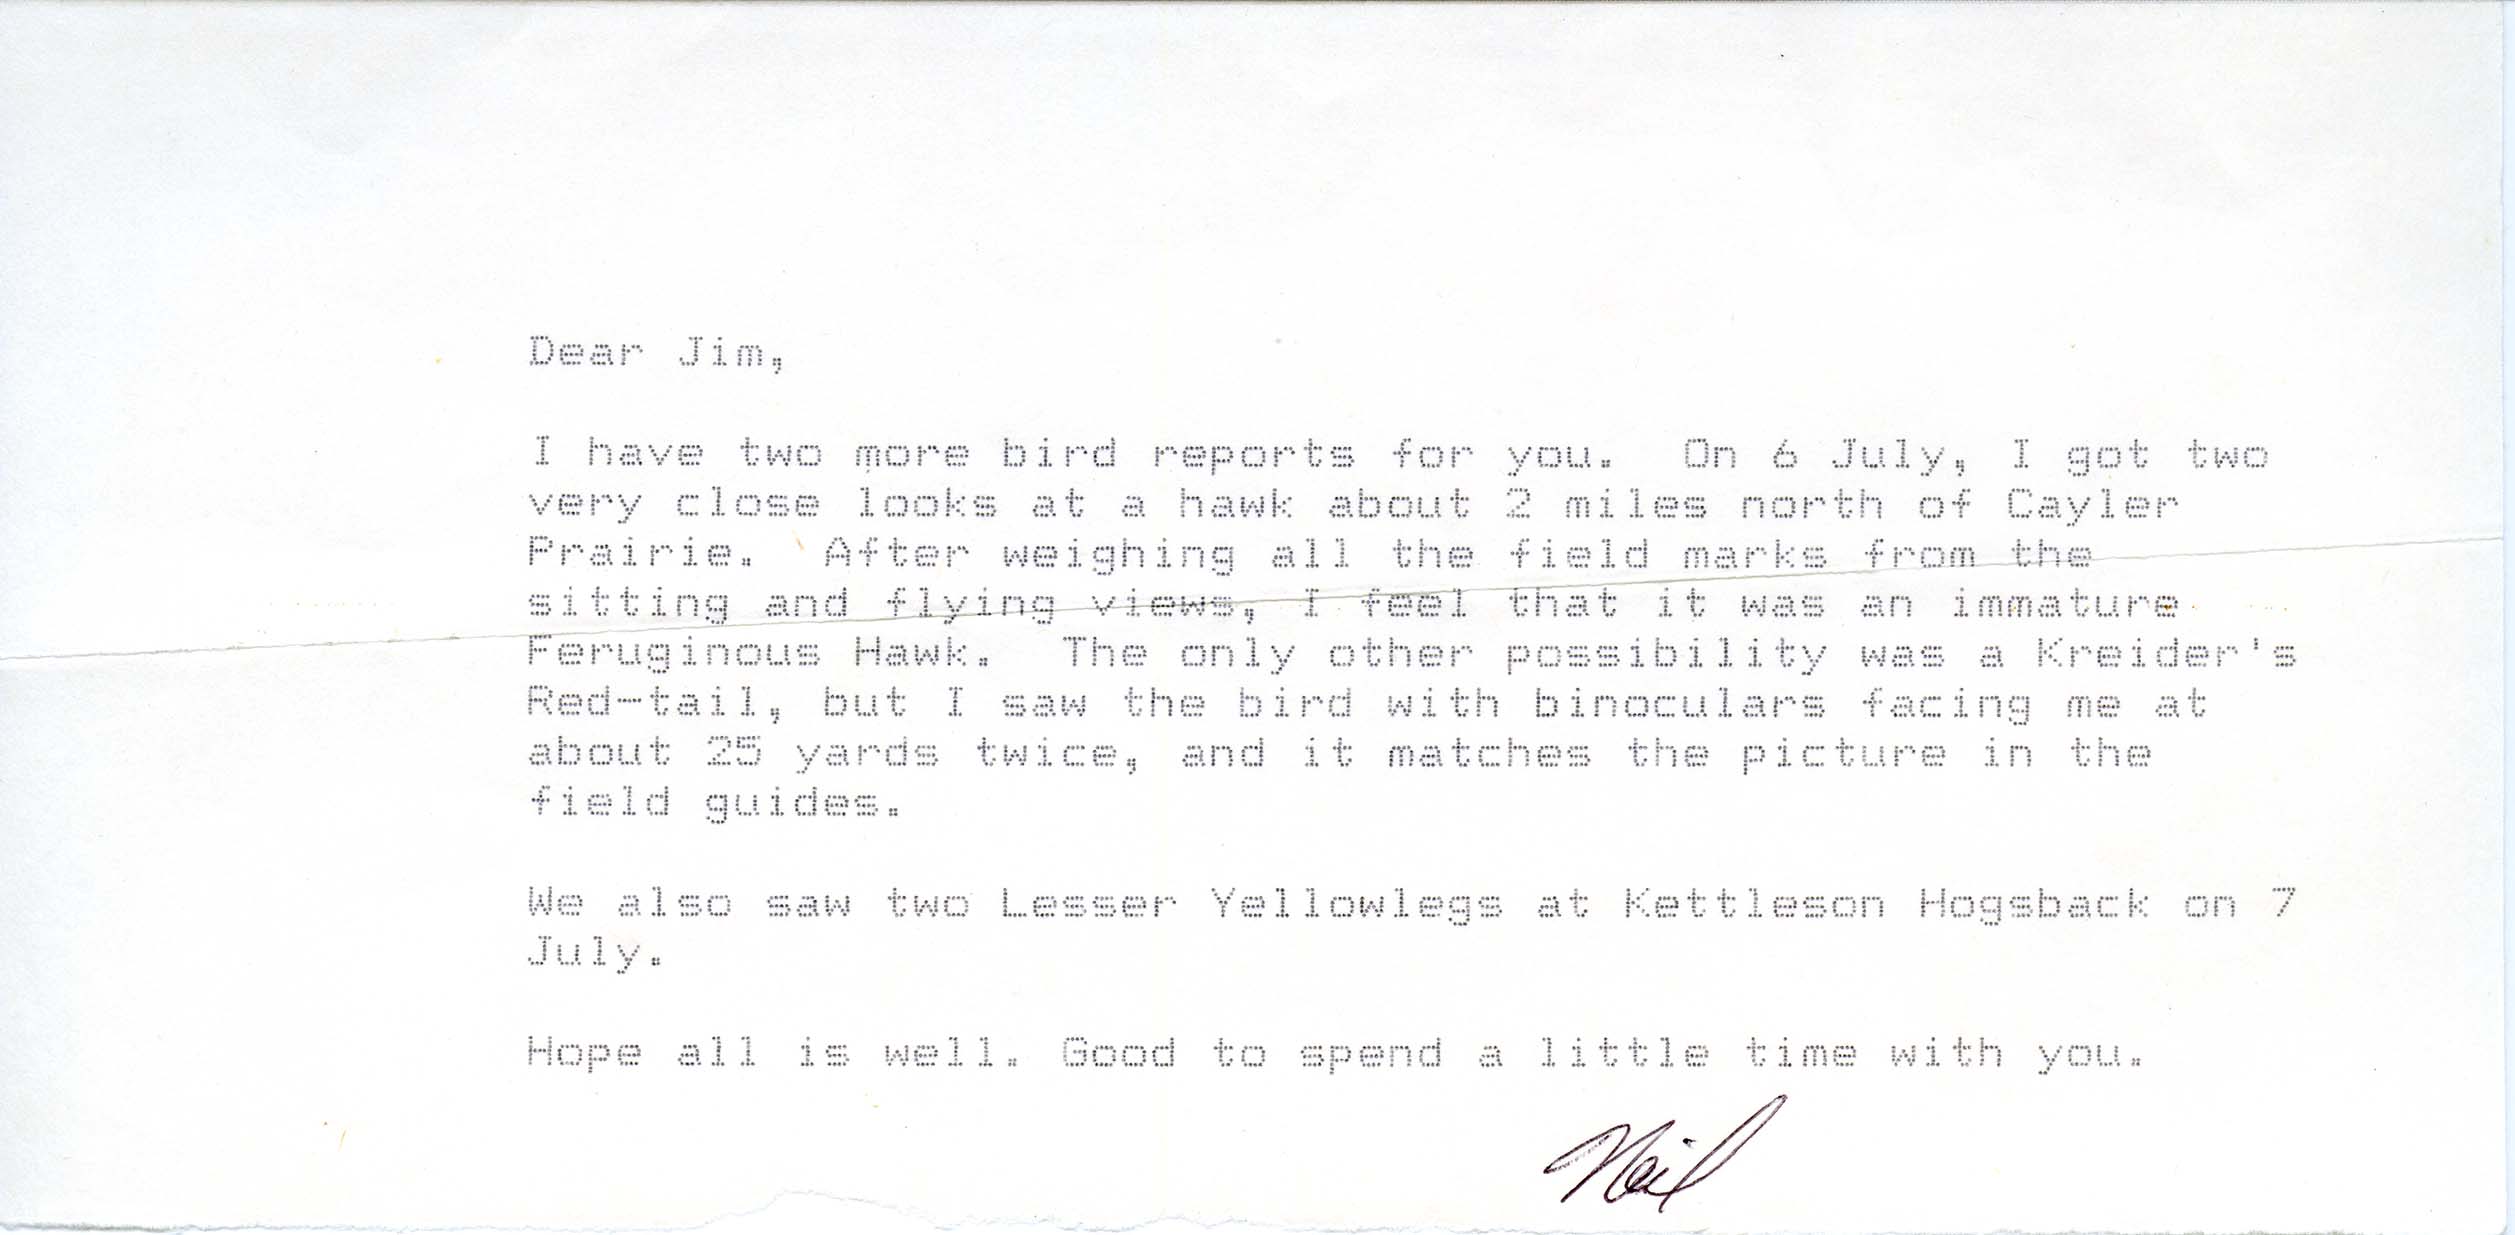 Neil Bernstein letter to James J. Dinsmore regarding summer bird sightings, summer 1989 